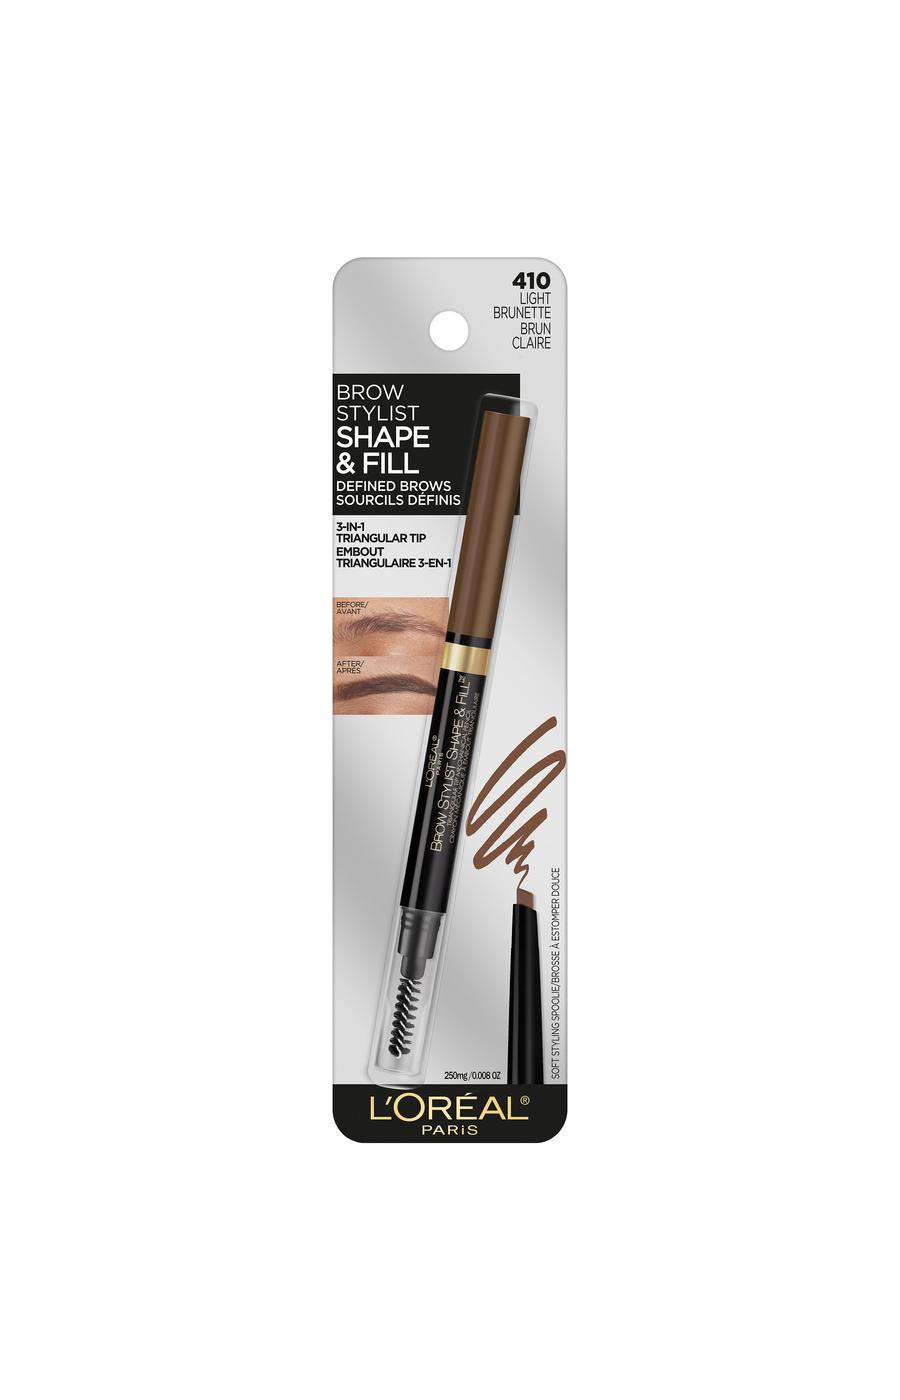 L'Oréal Paris Brow Stylist Shape and Fill Mechanical Eye Brow Makeup Pencil Light Brunette; image 1 of 3